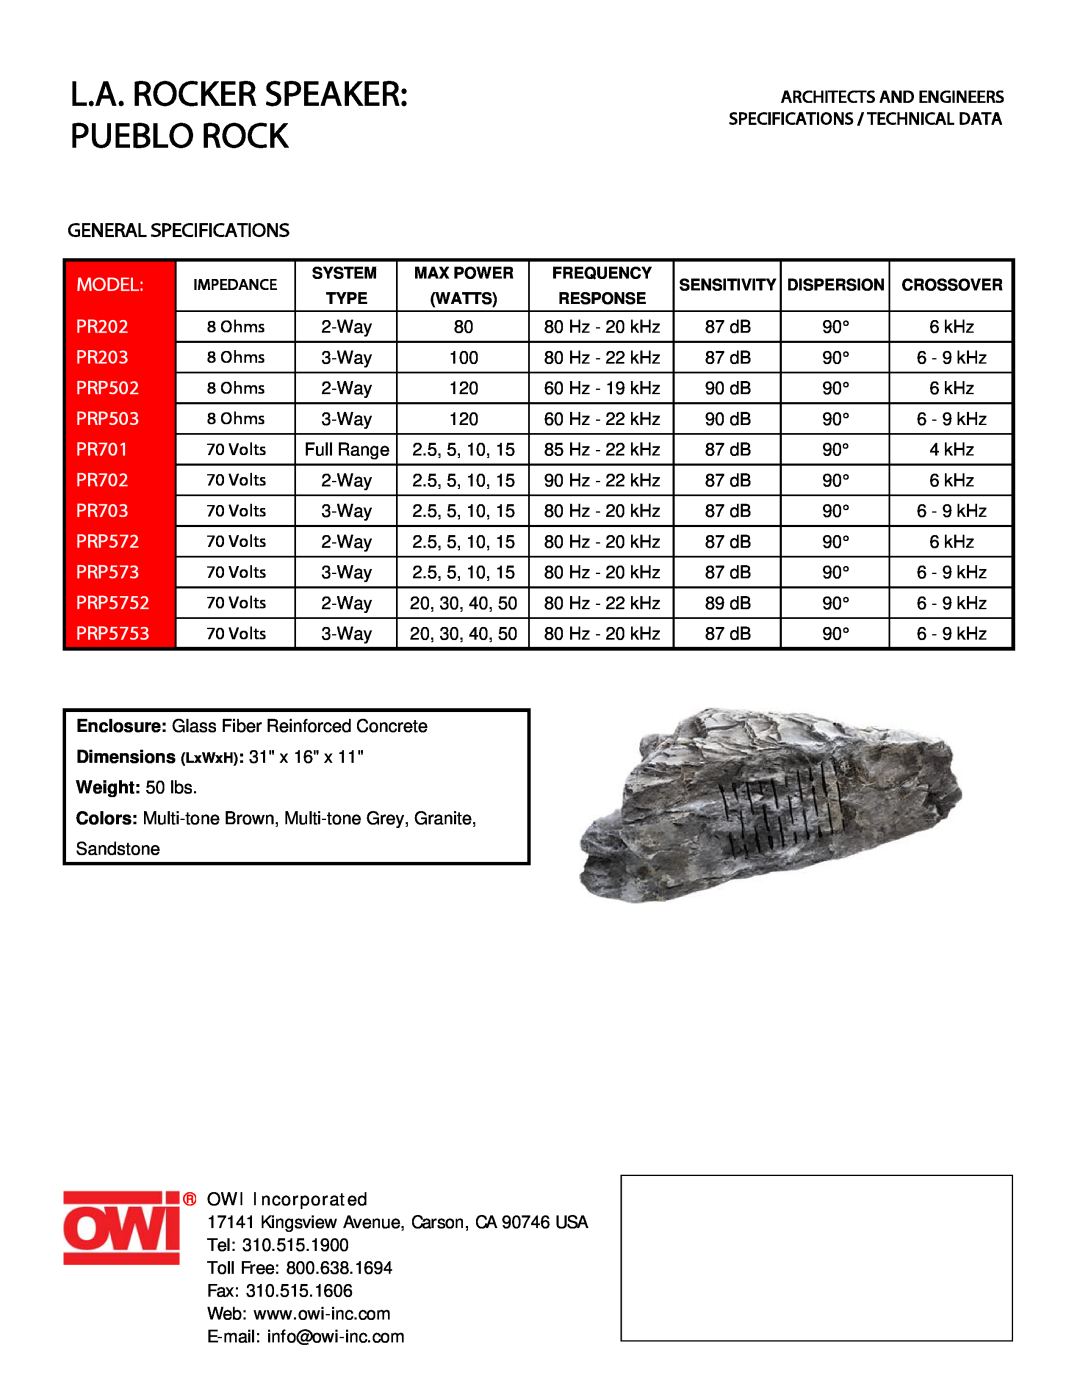 OWI PRP503 specifications L.A. Rocker Speaker Pueblo Rock, General Specifications, Model, PR202, PR203, PRP502, PR701 